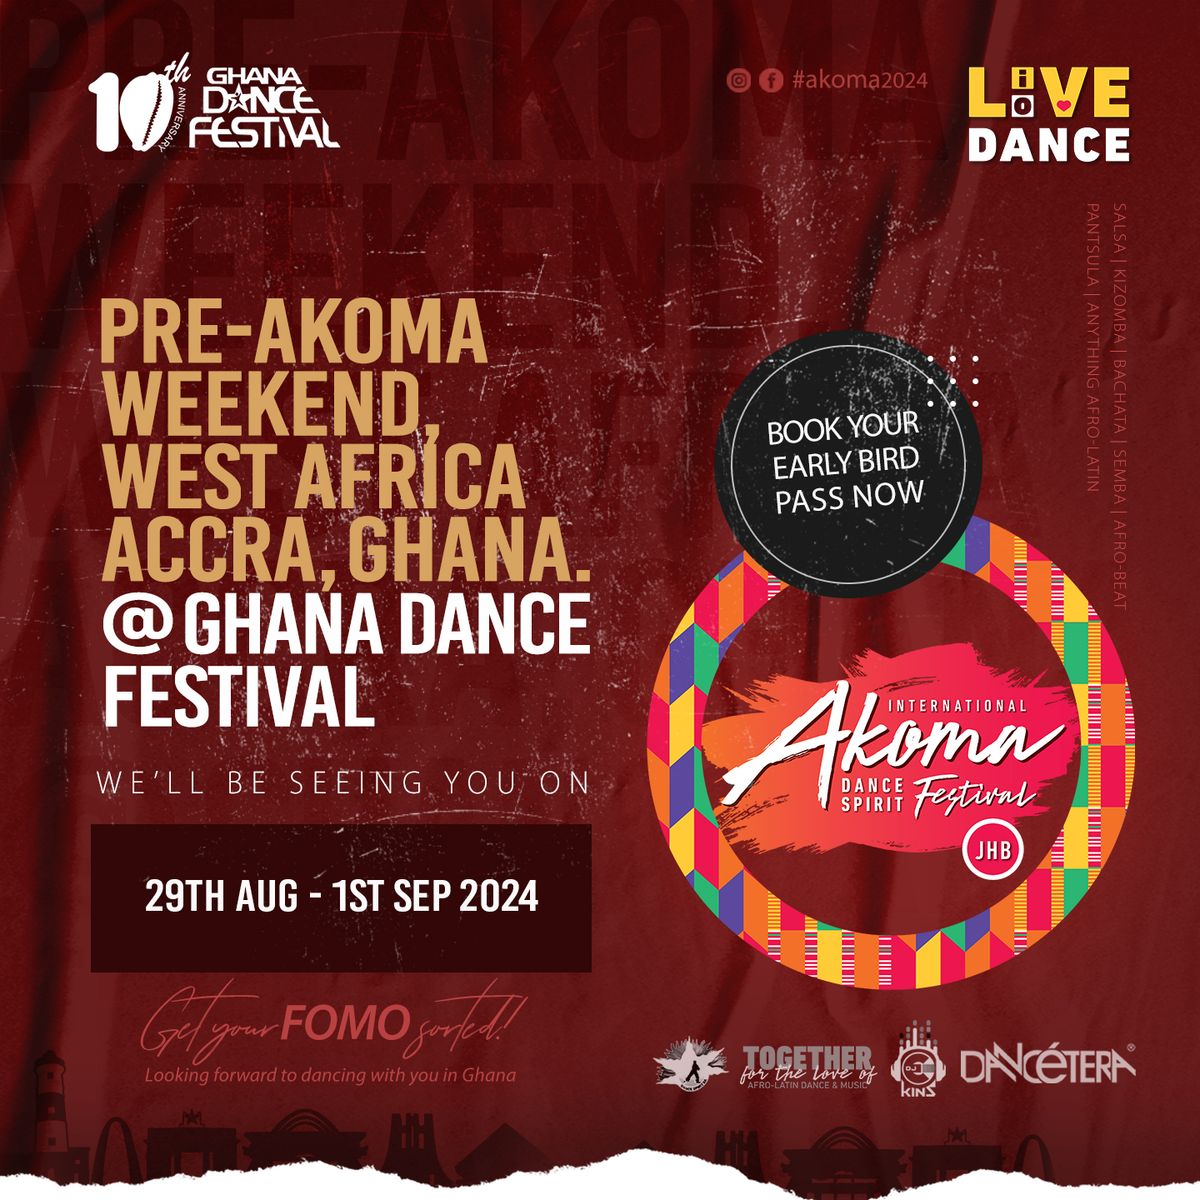 Pre-Akoma Weekend, West Africa. Accra, Ghana